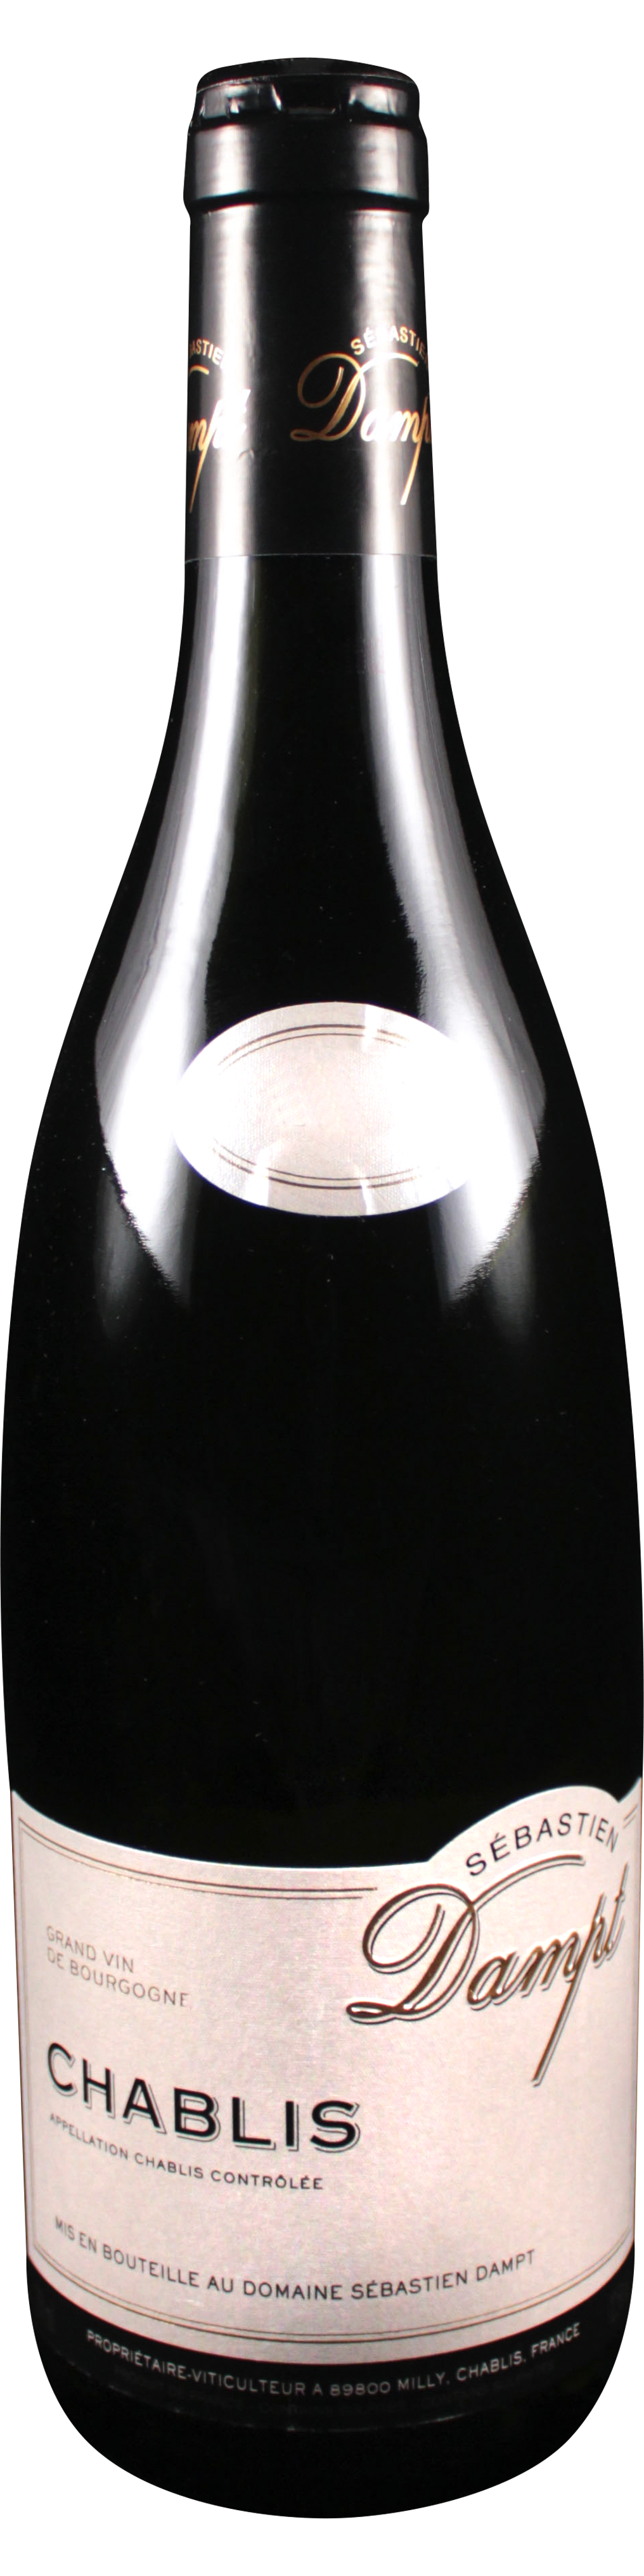 Bottle shot of 2011 Chablis